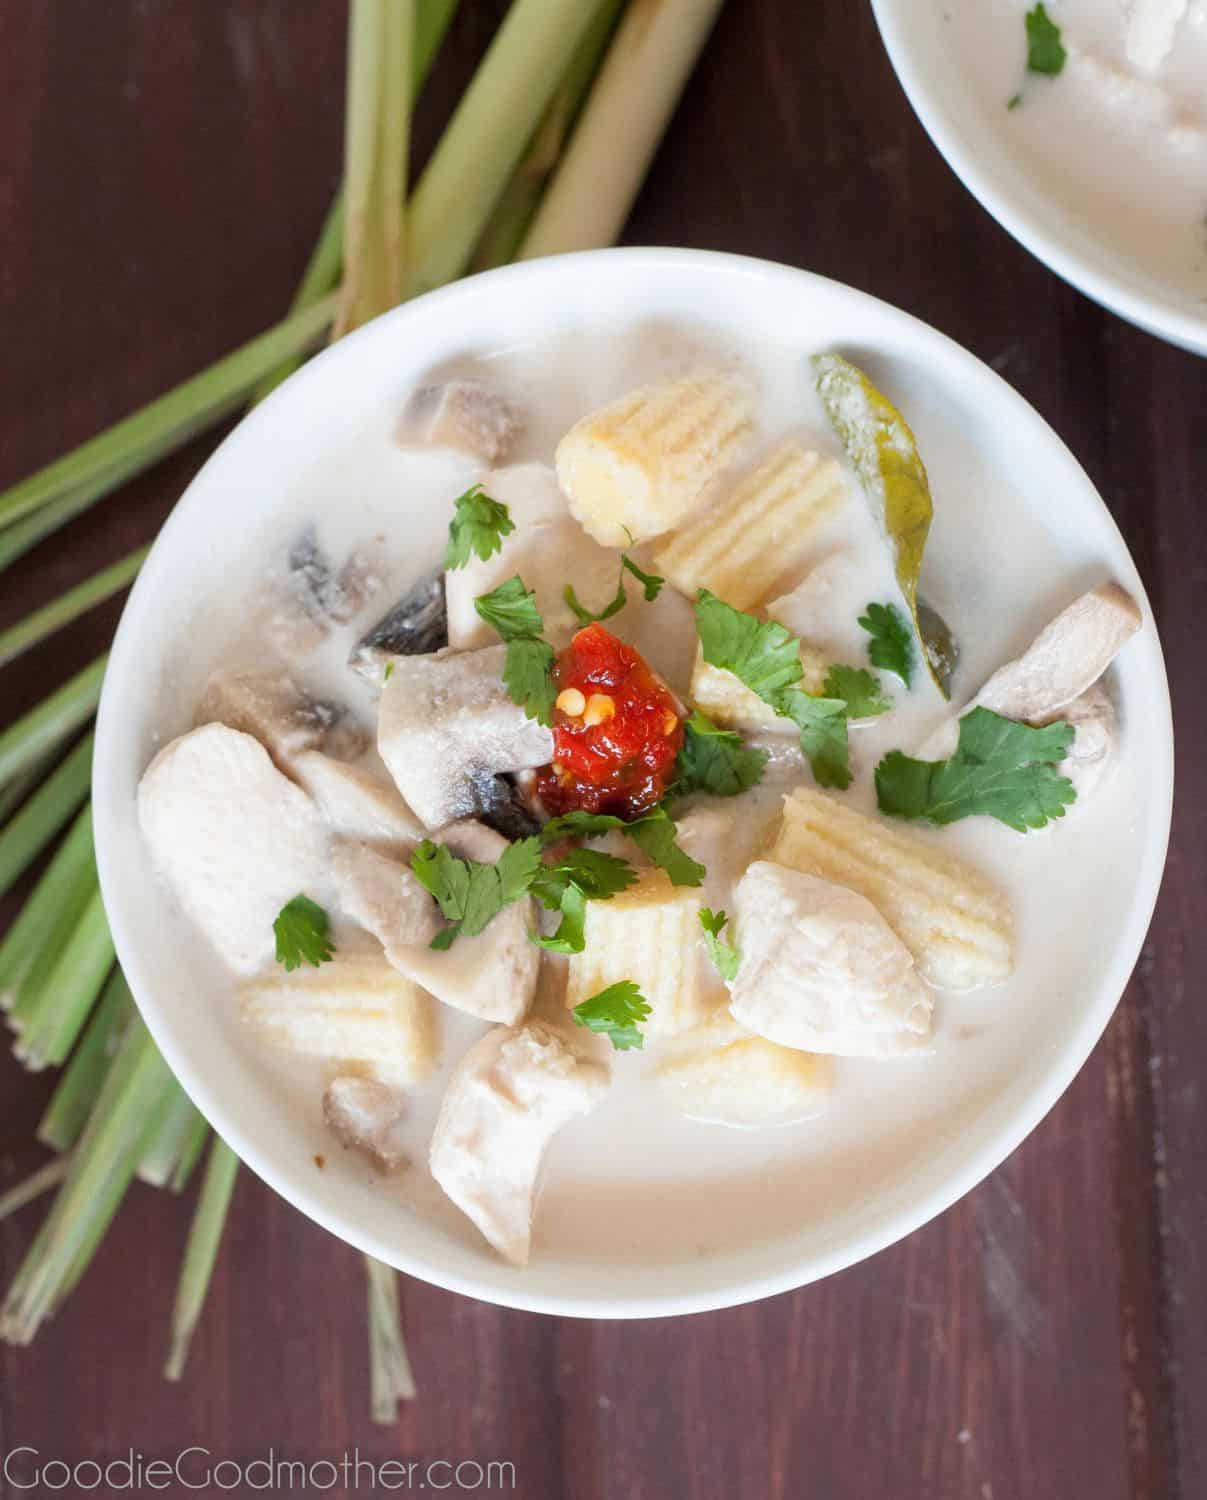 Thai ginger lemongrass soup - Authentic Tom Kha Gai - A nourishing and healthy Thai soup recipe by GoodieGodmother.com